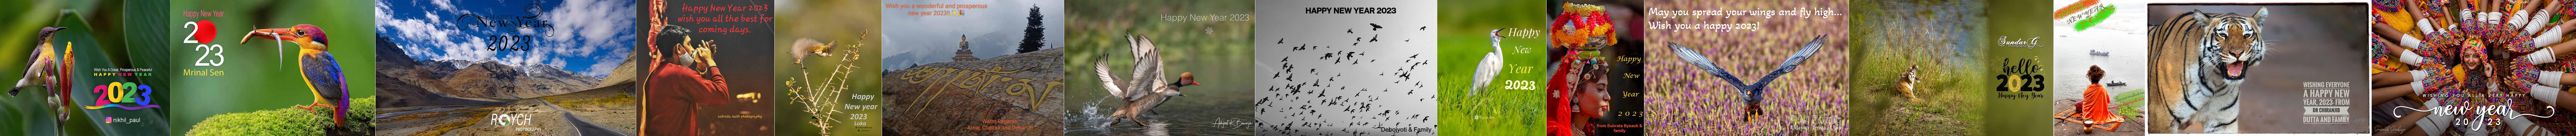 Happy New Year-2023